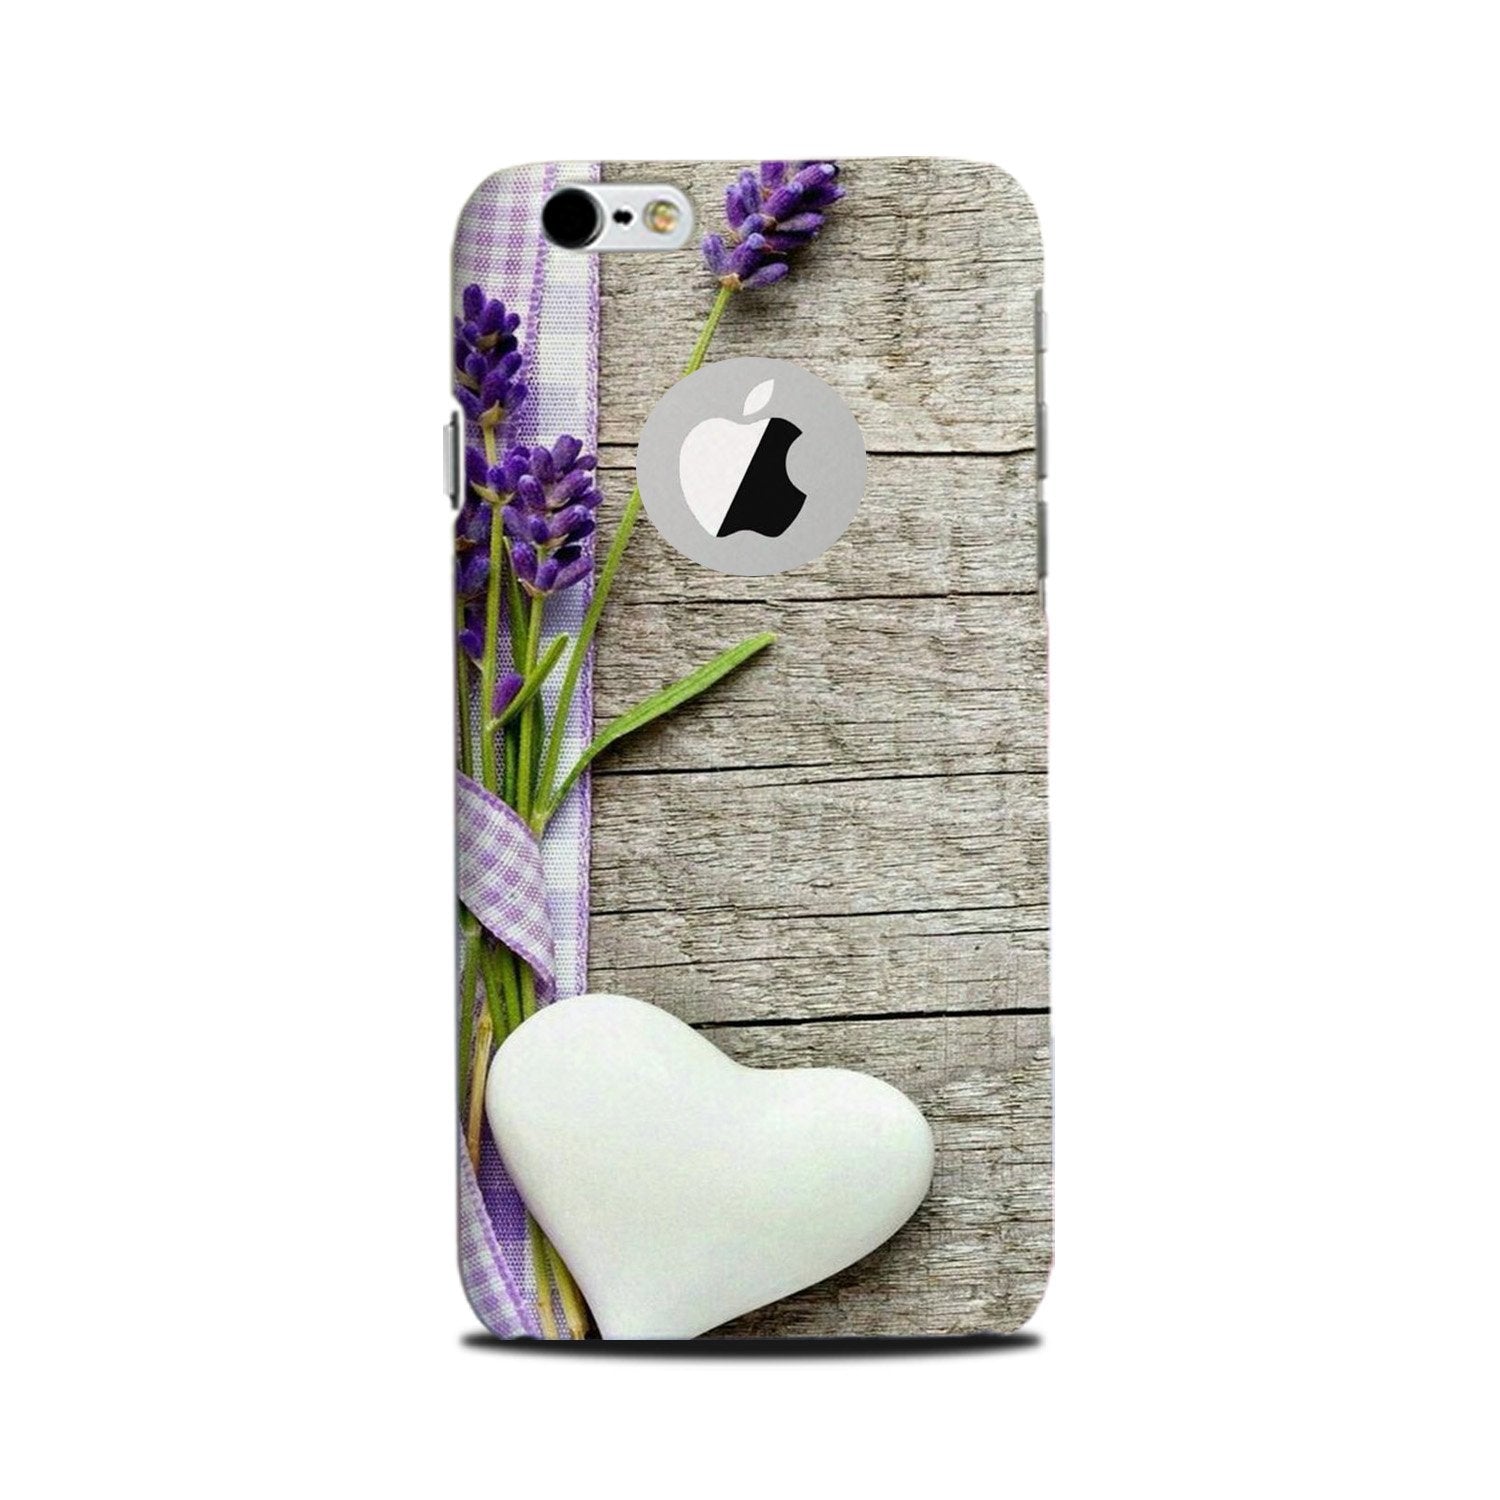 White Heart Case for iPhone 6 Plus / 6s Plus logo cut(Design No. 298)